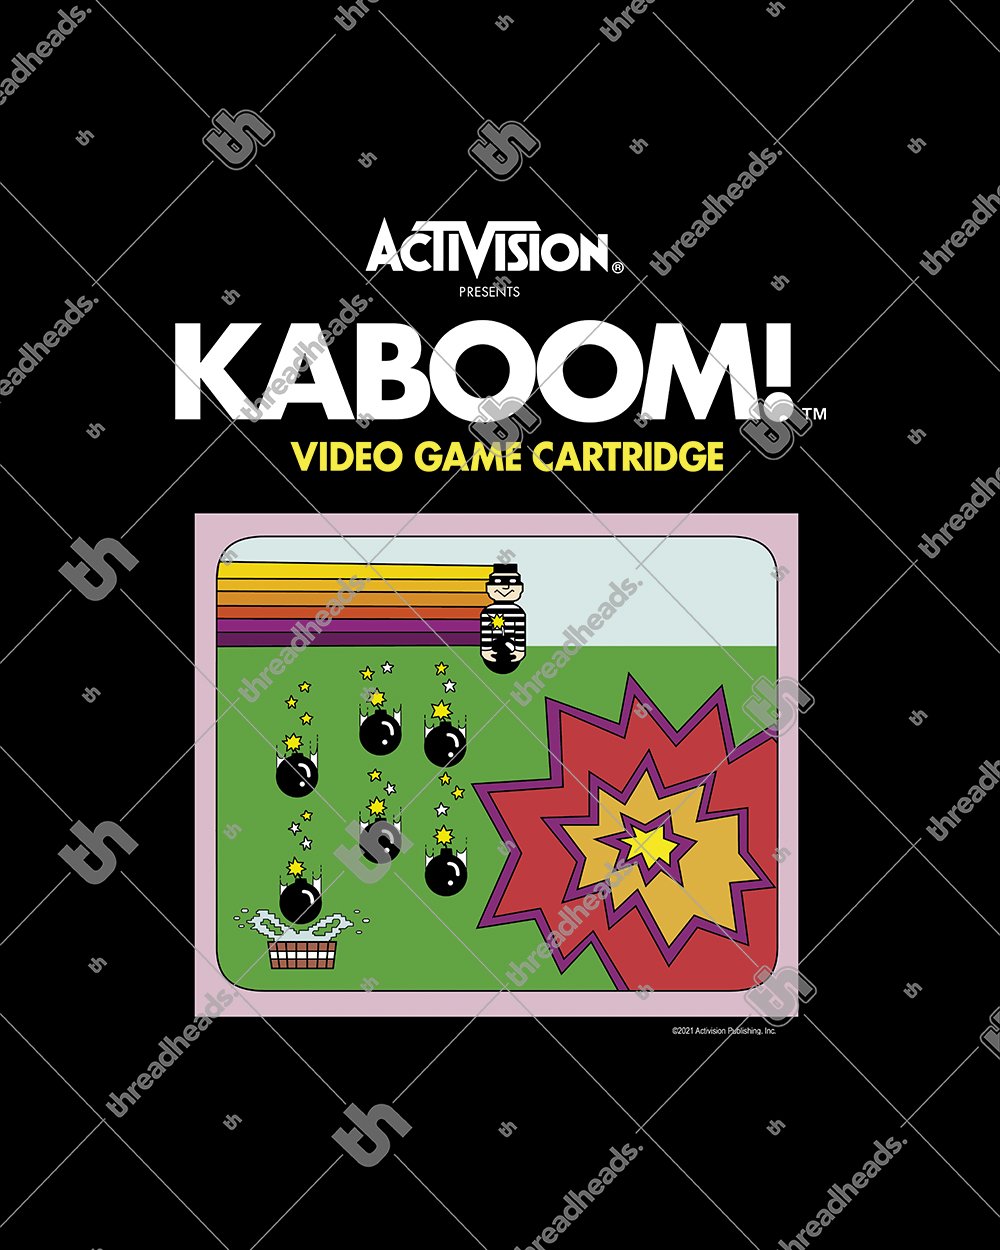 Kaboom Kids Sweater Australia Online #colour_black